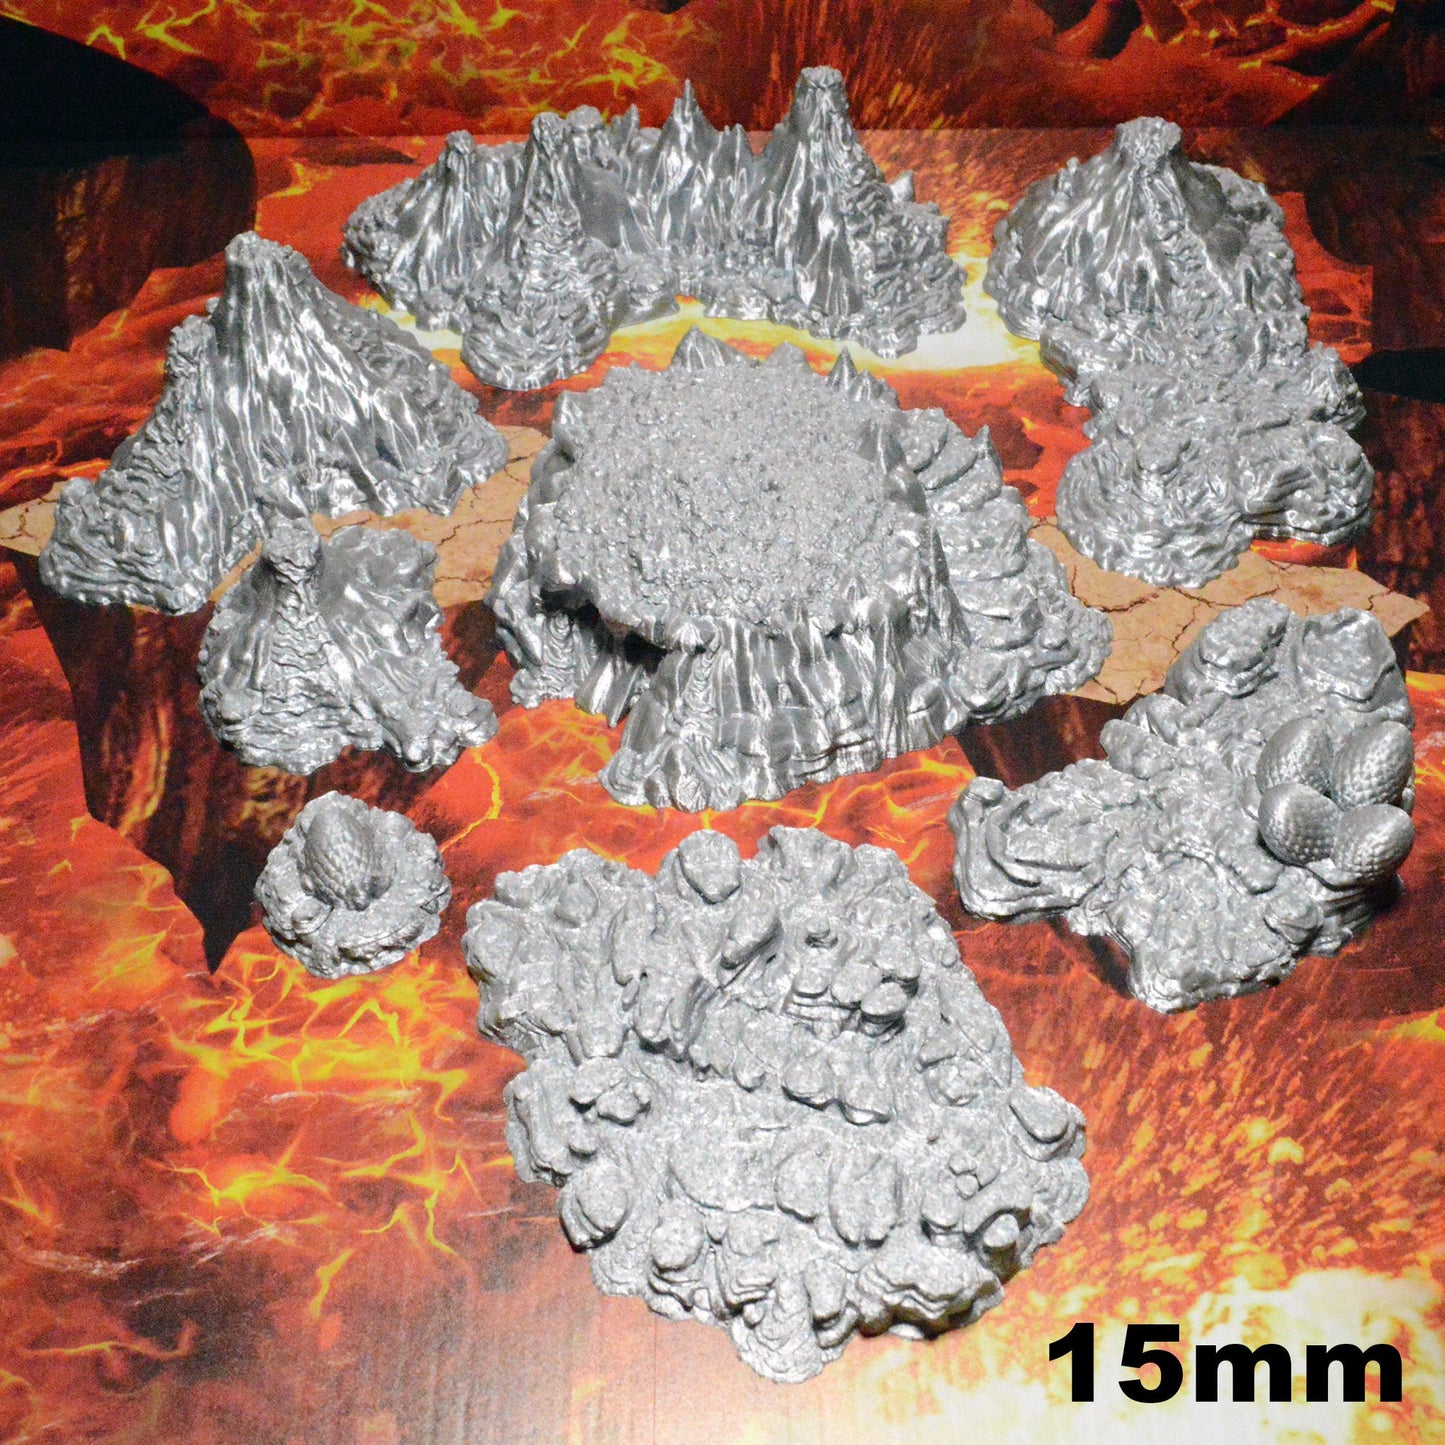 Dragon Lair 15mm 28mm for D&D Terrain, DnD Pathfinder Cavern Den, Gold Gems Lava Eggs